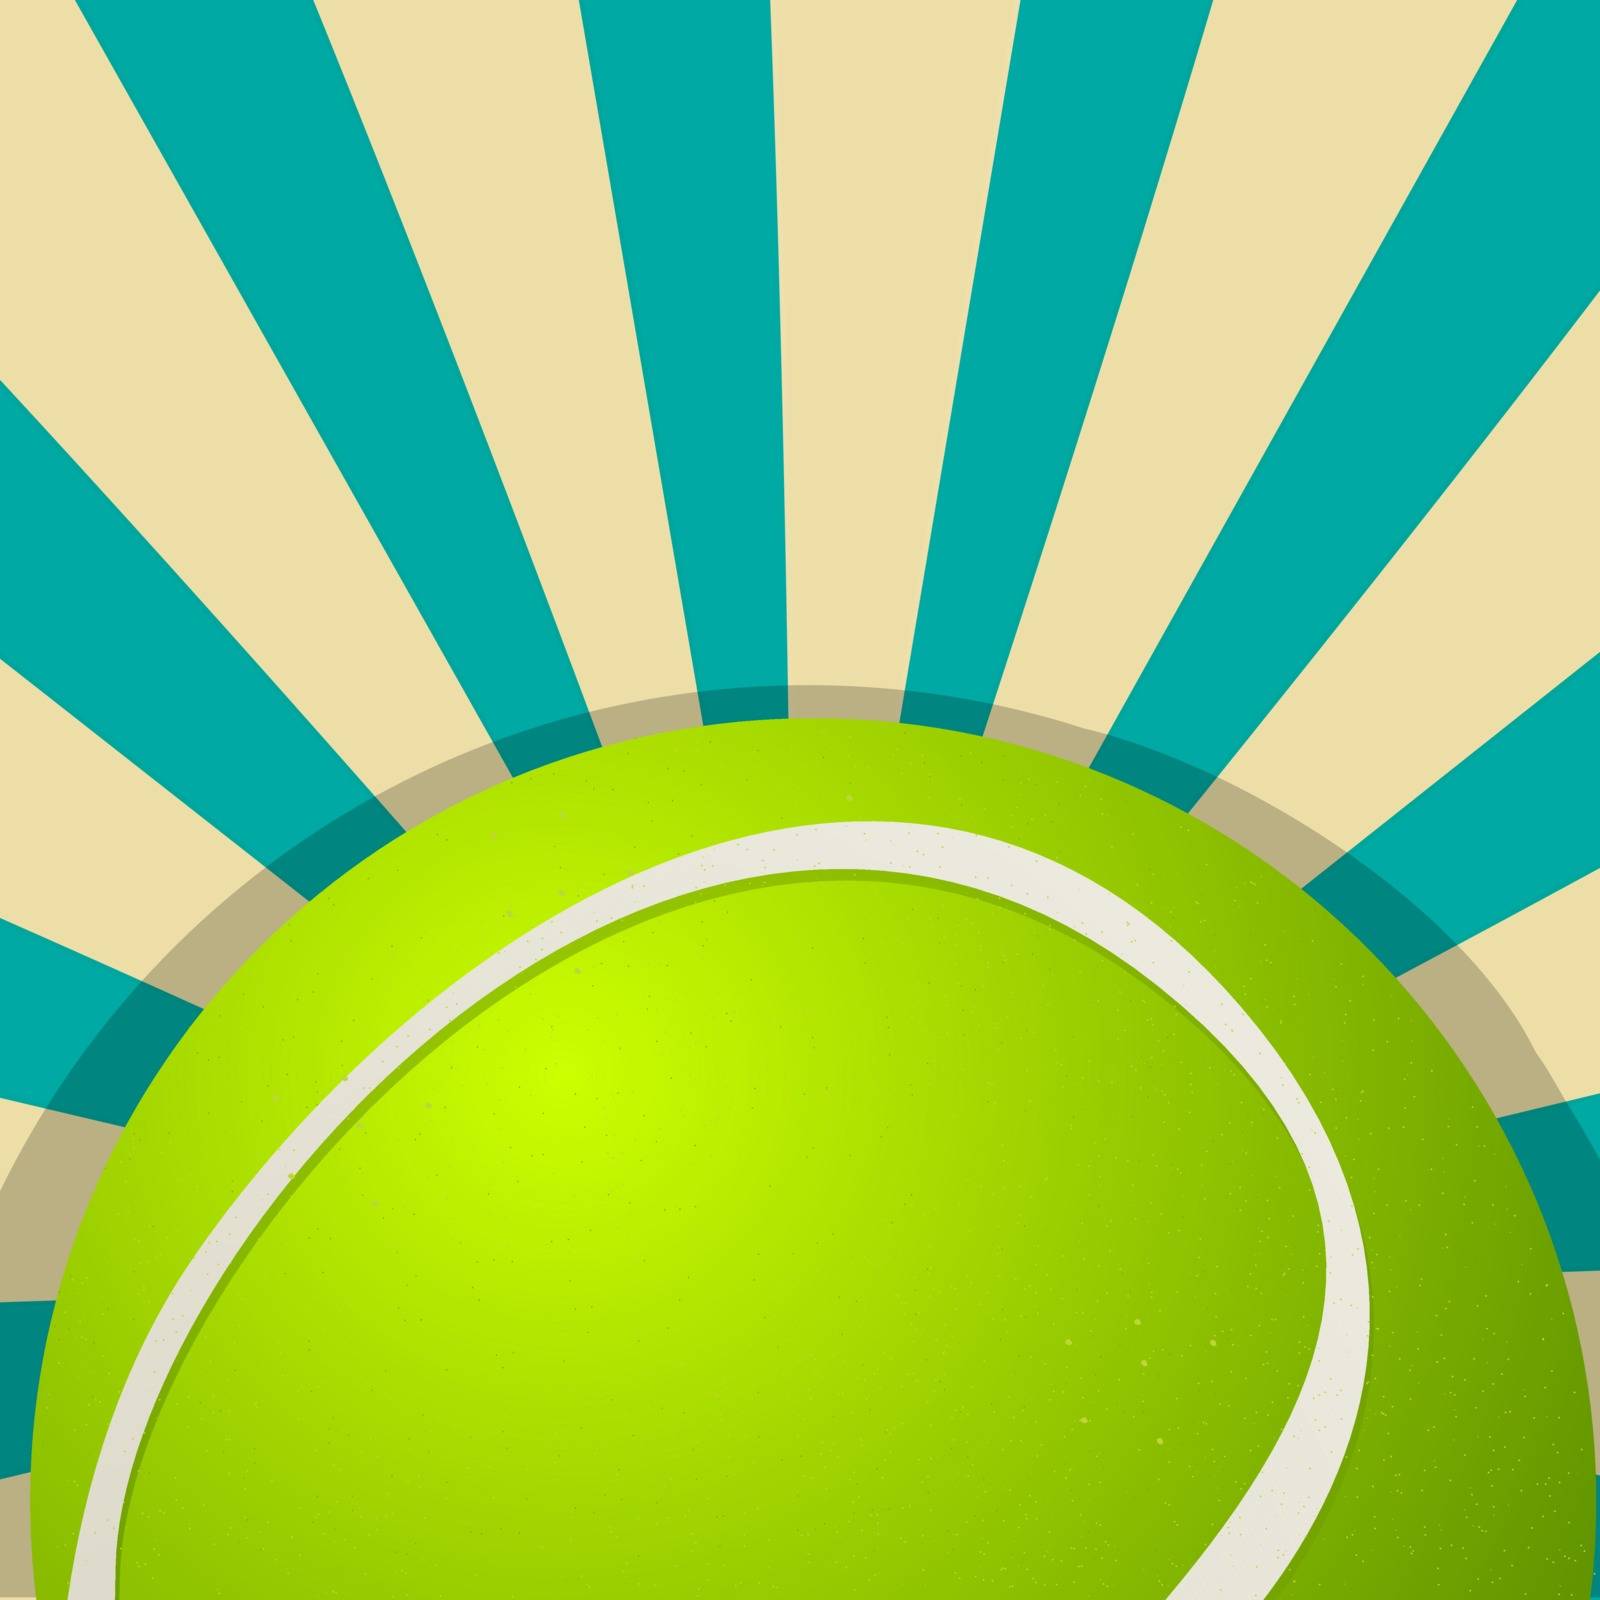 Tennis ball icon design, sports background